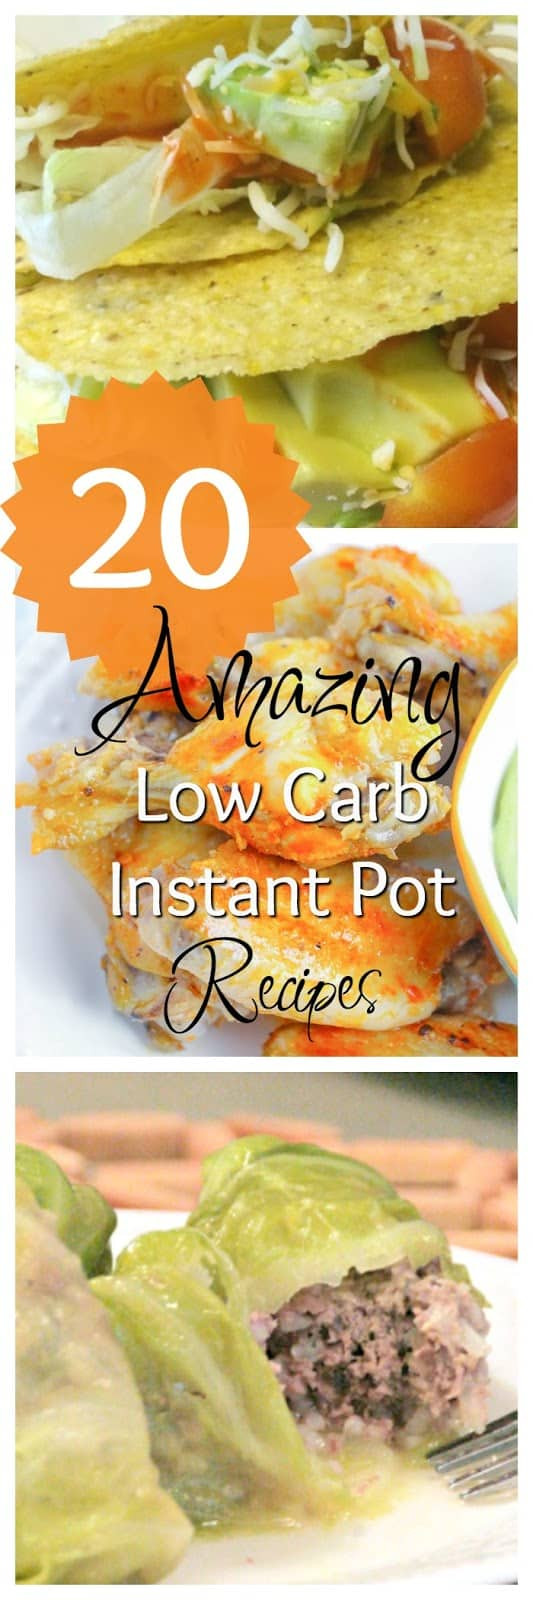 Instant Pot Recipes For Diabetics
 20 of the Most AMAZING Low Carb Instant Pot Recipes We